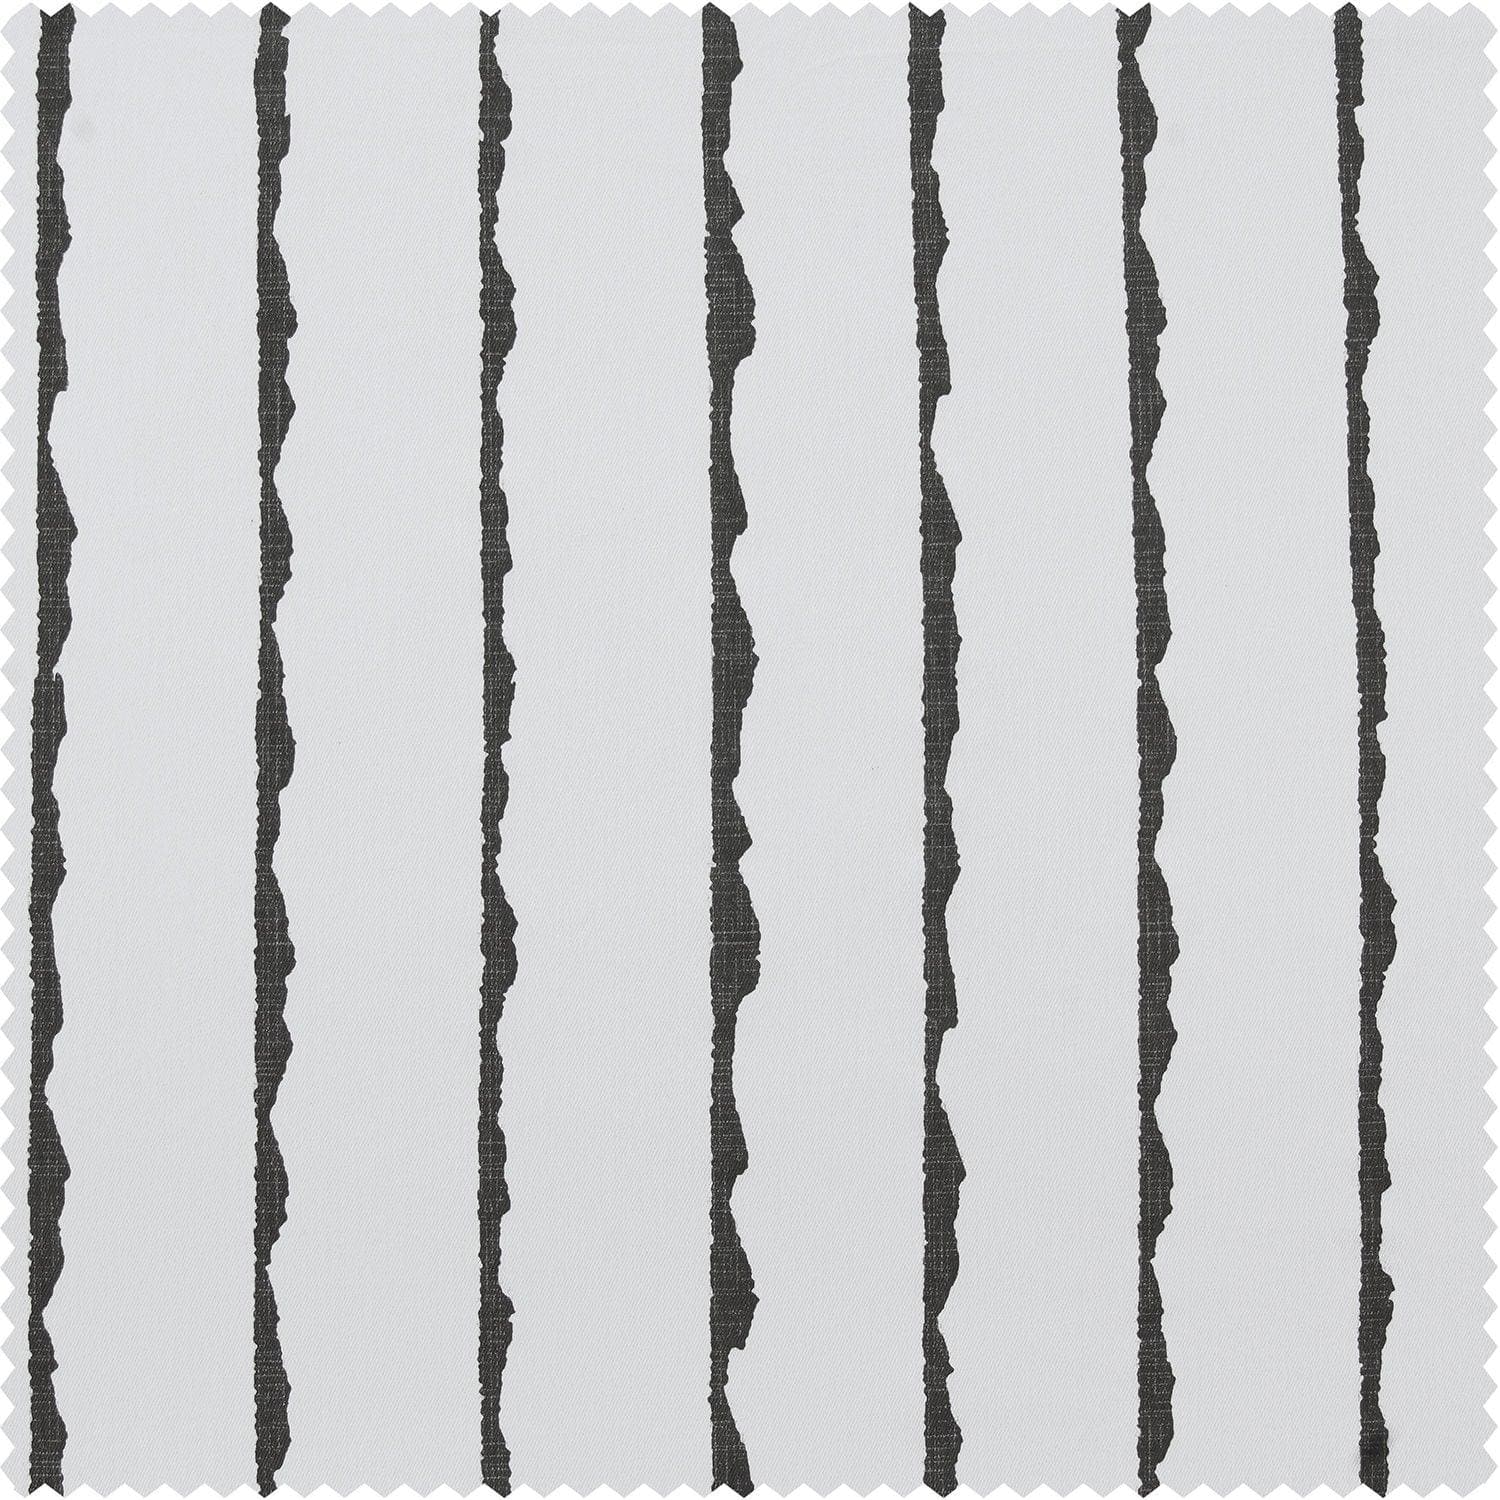 Sharkskin Black Striped Striped Printed Cotton Custom Curtain